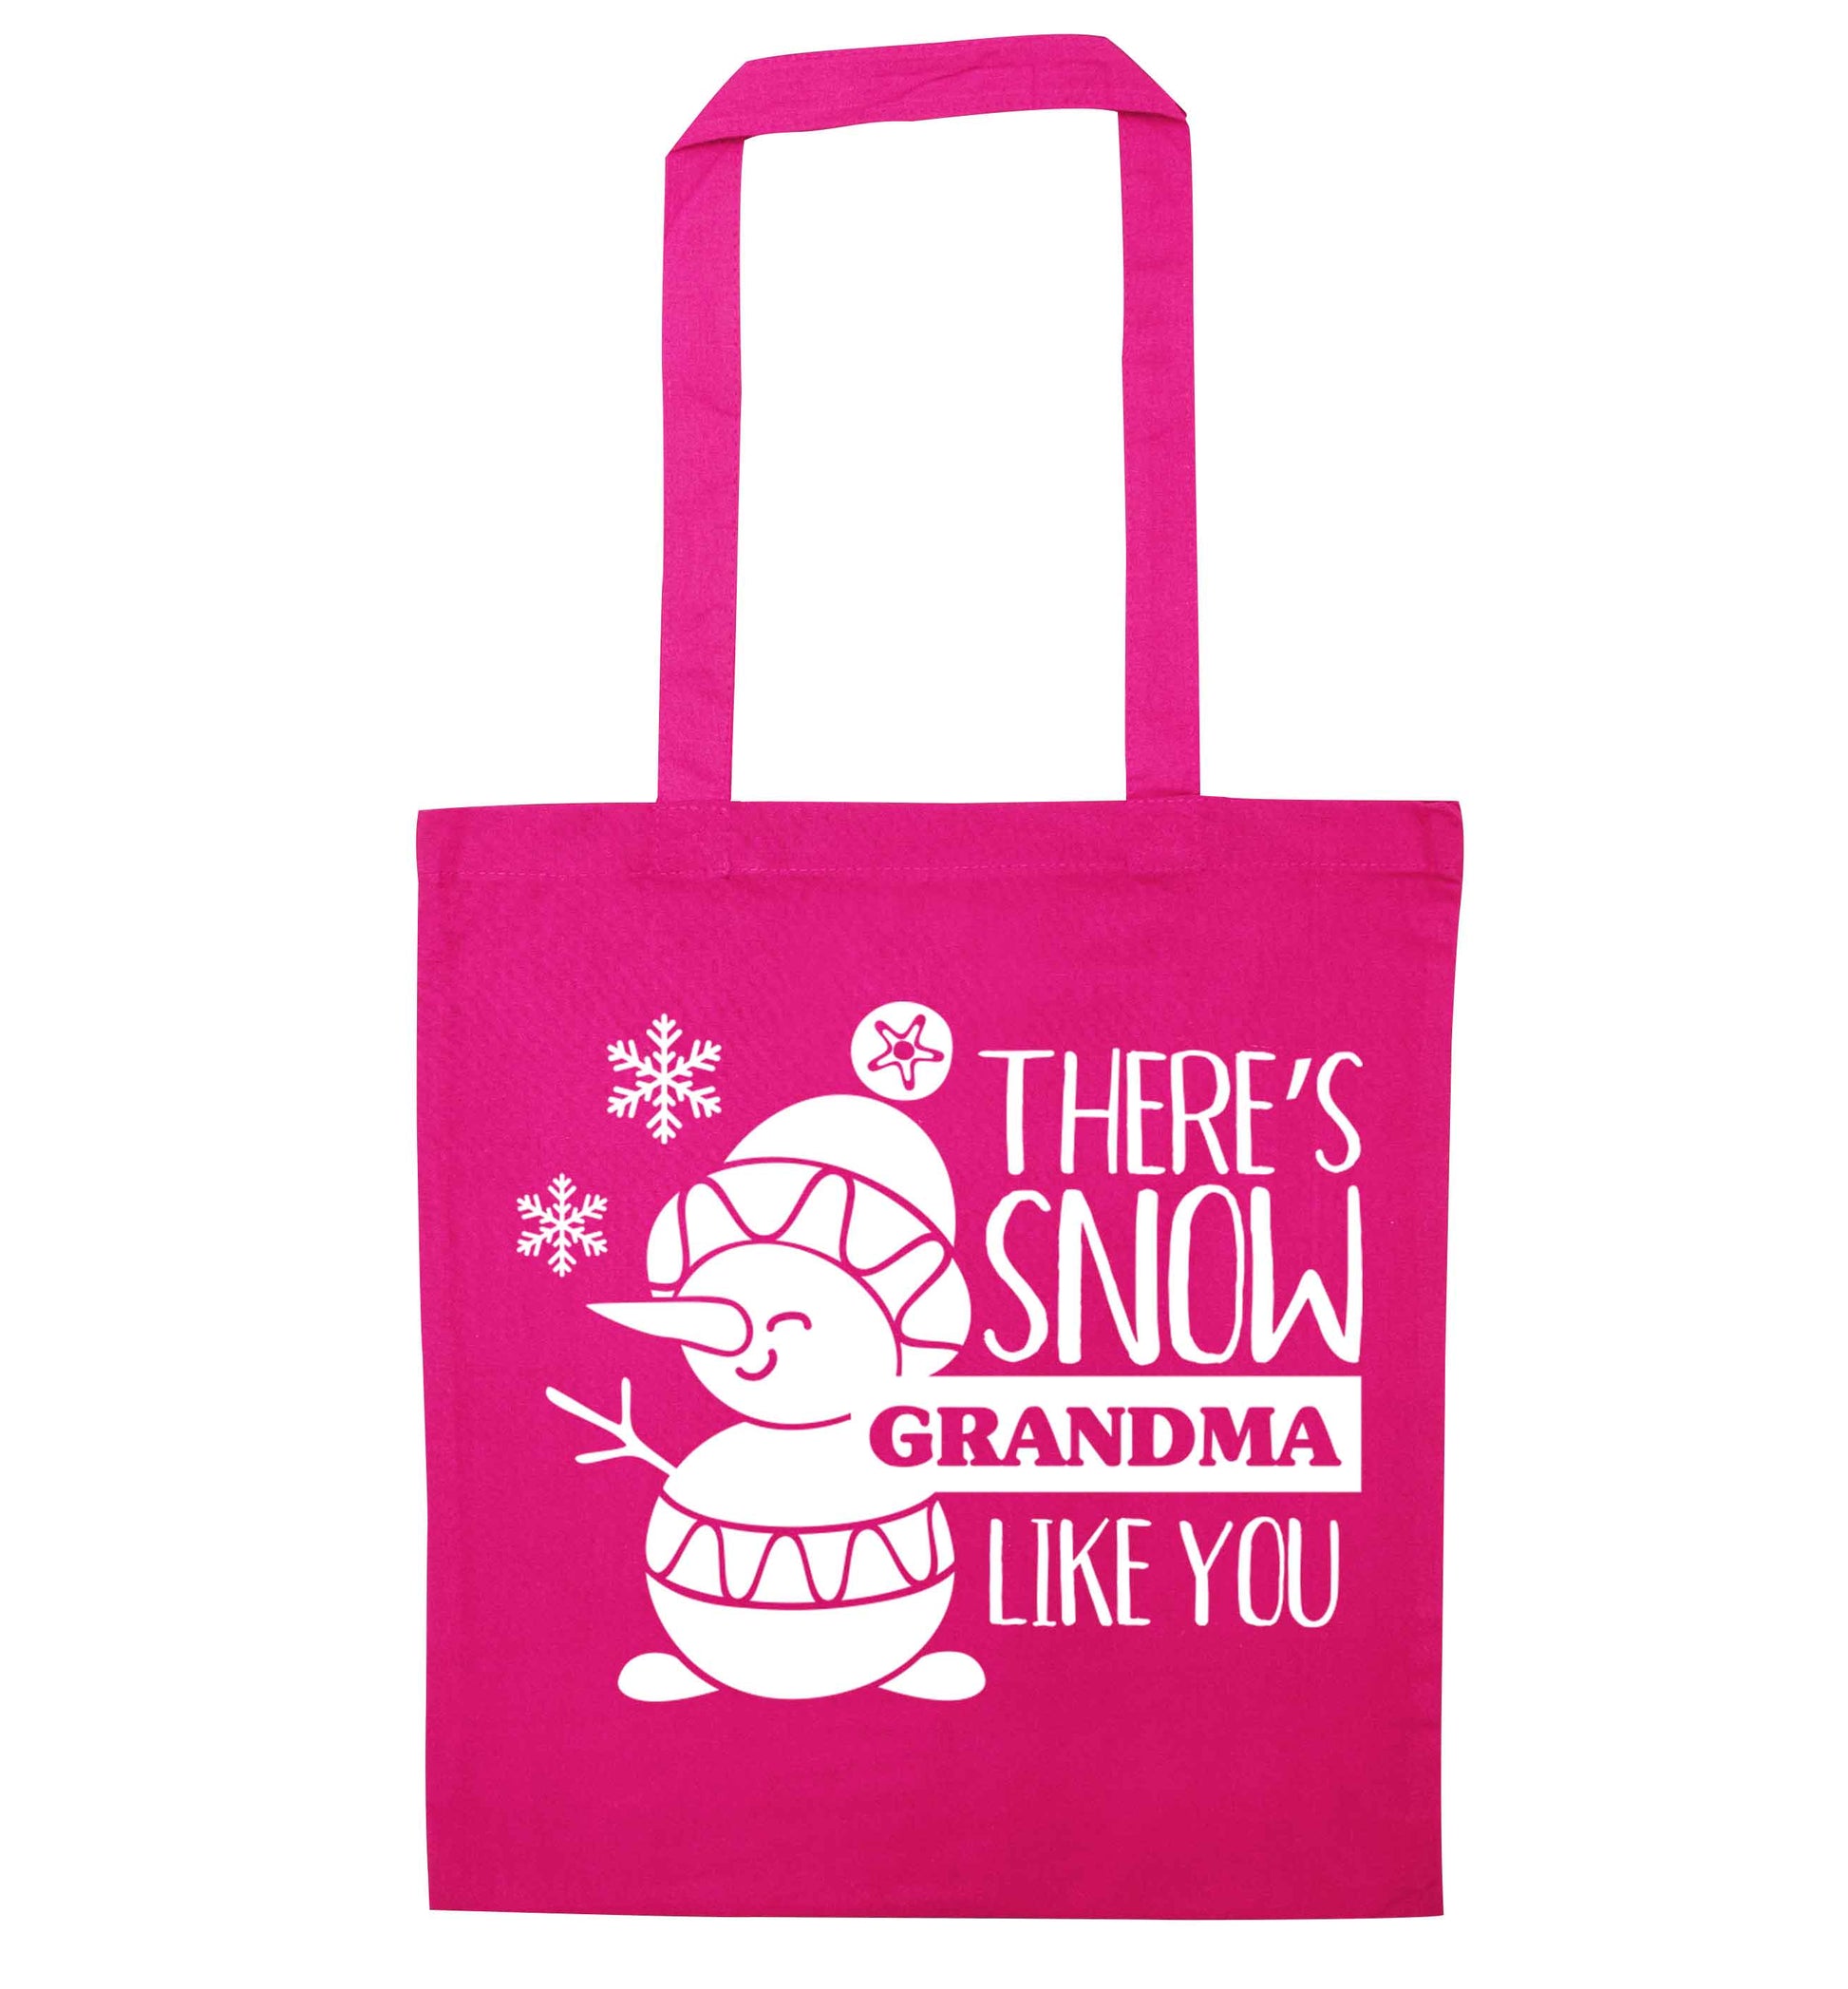 There's snow grandma like you pink tote bag